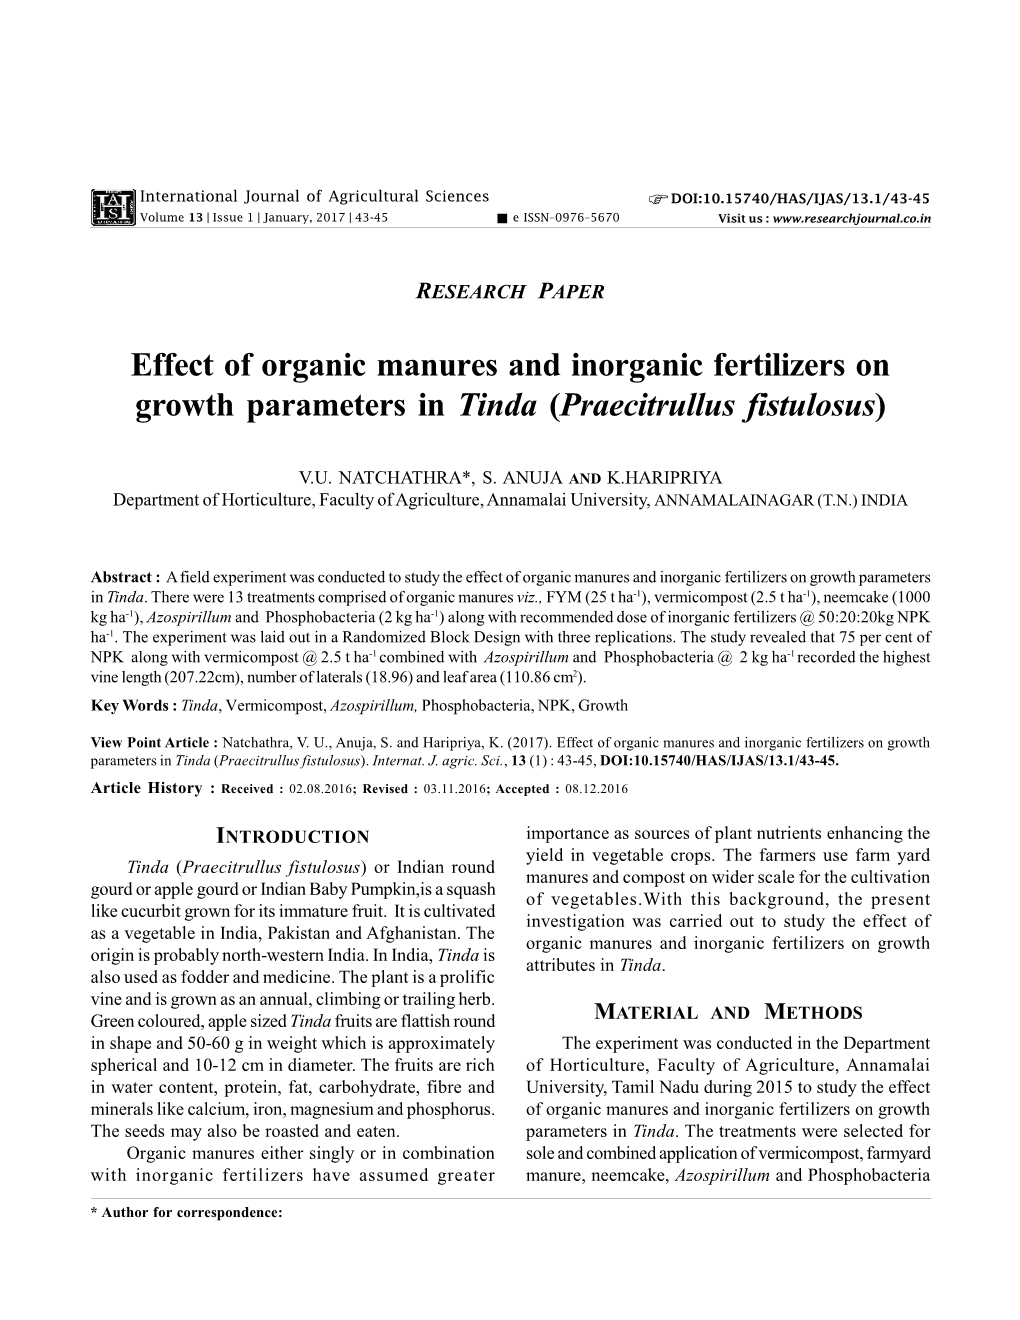 Effect of Organic Manures and Inorganic Fertilizers on Growth Parameters in Tinda (Praecitrullus Fistulosus)